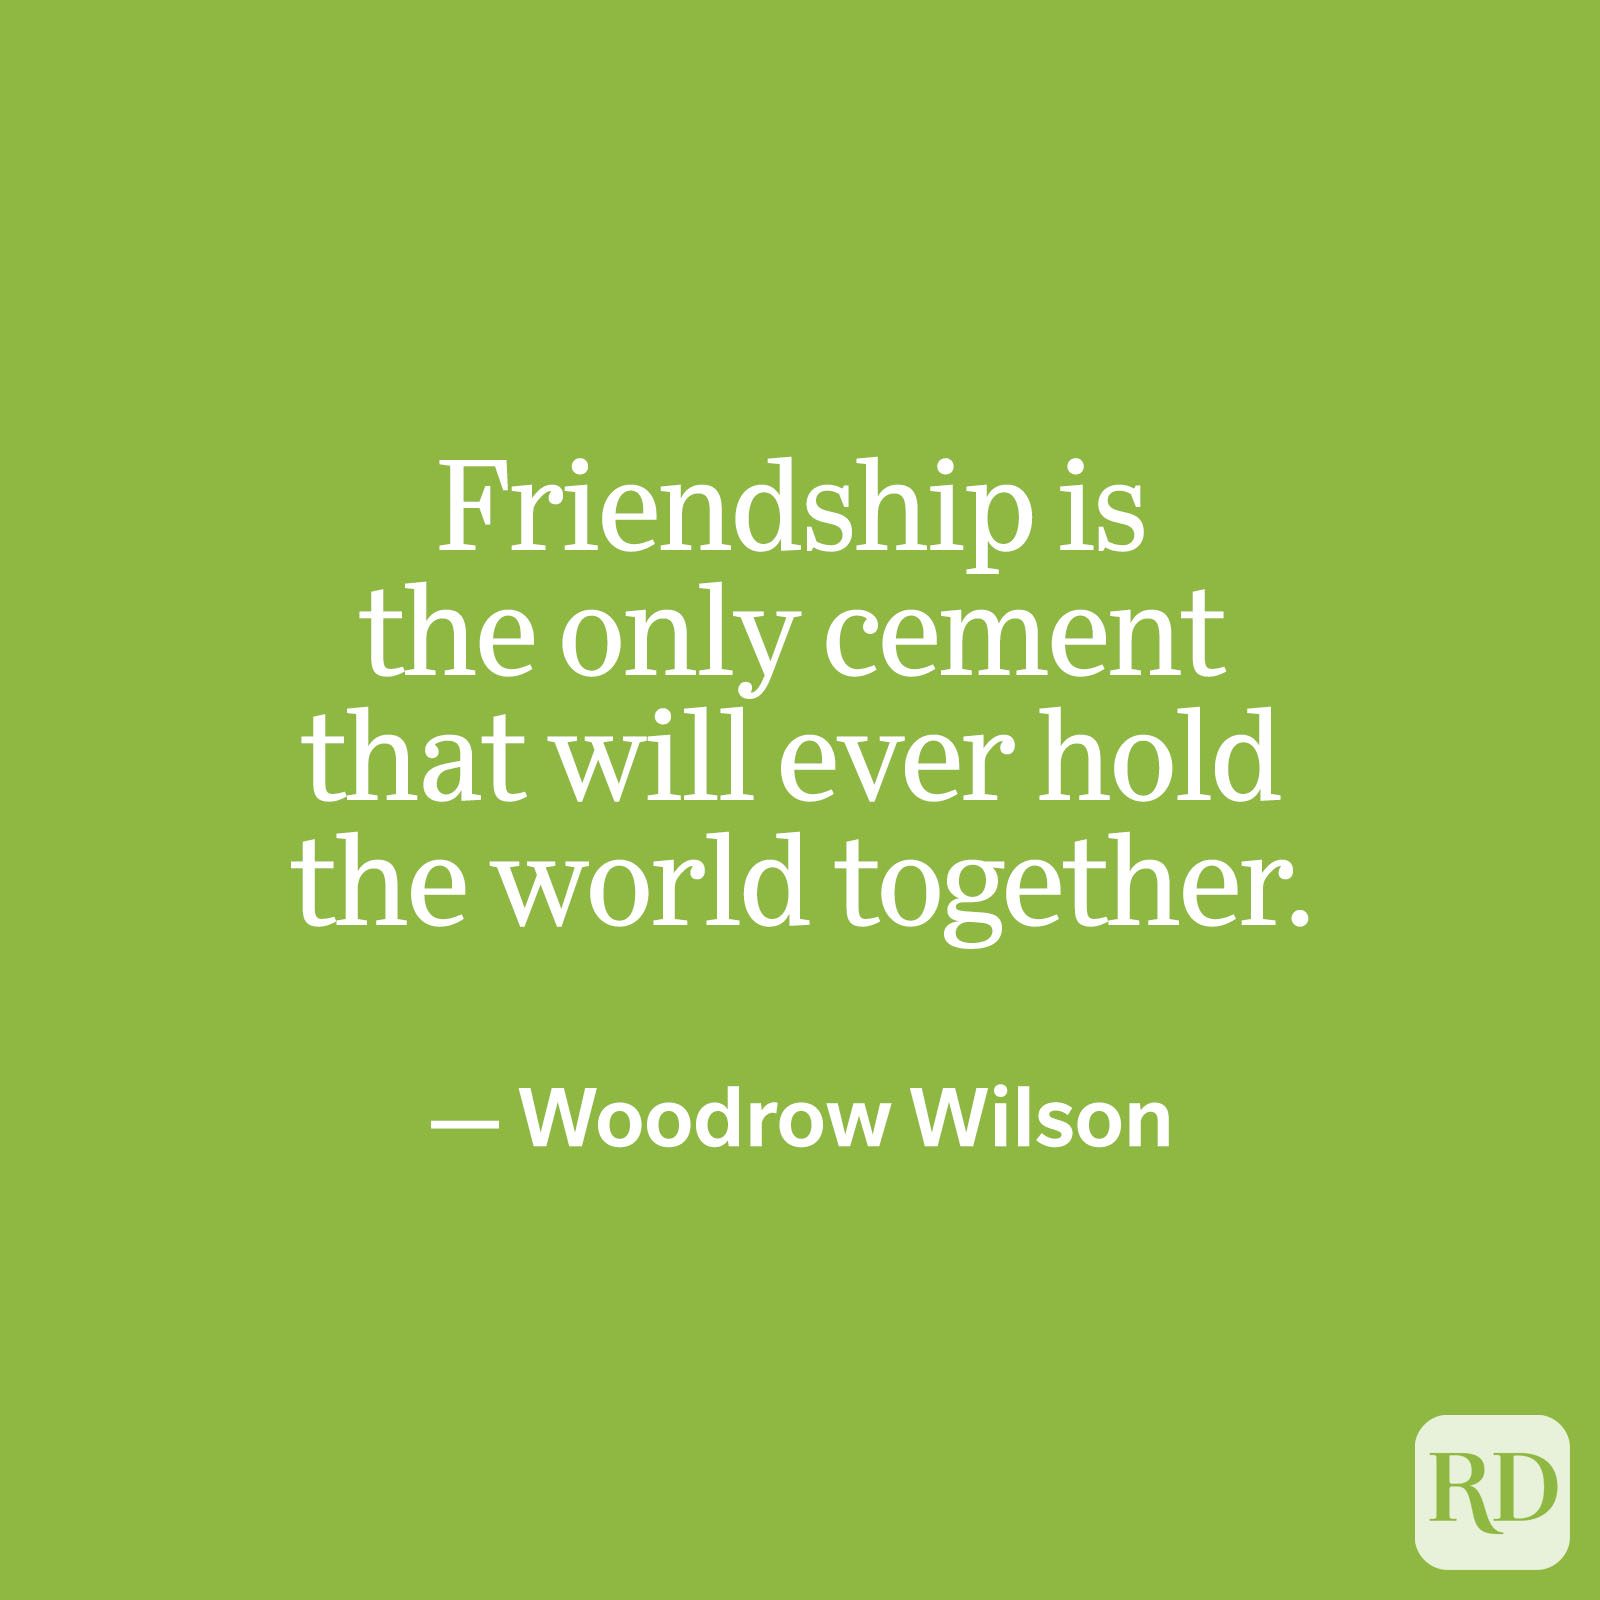 sad ending friendship quotes